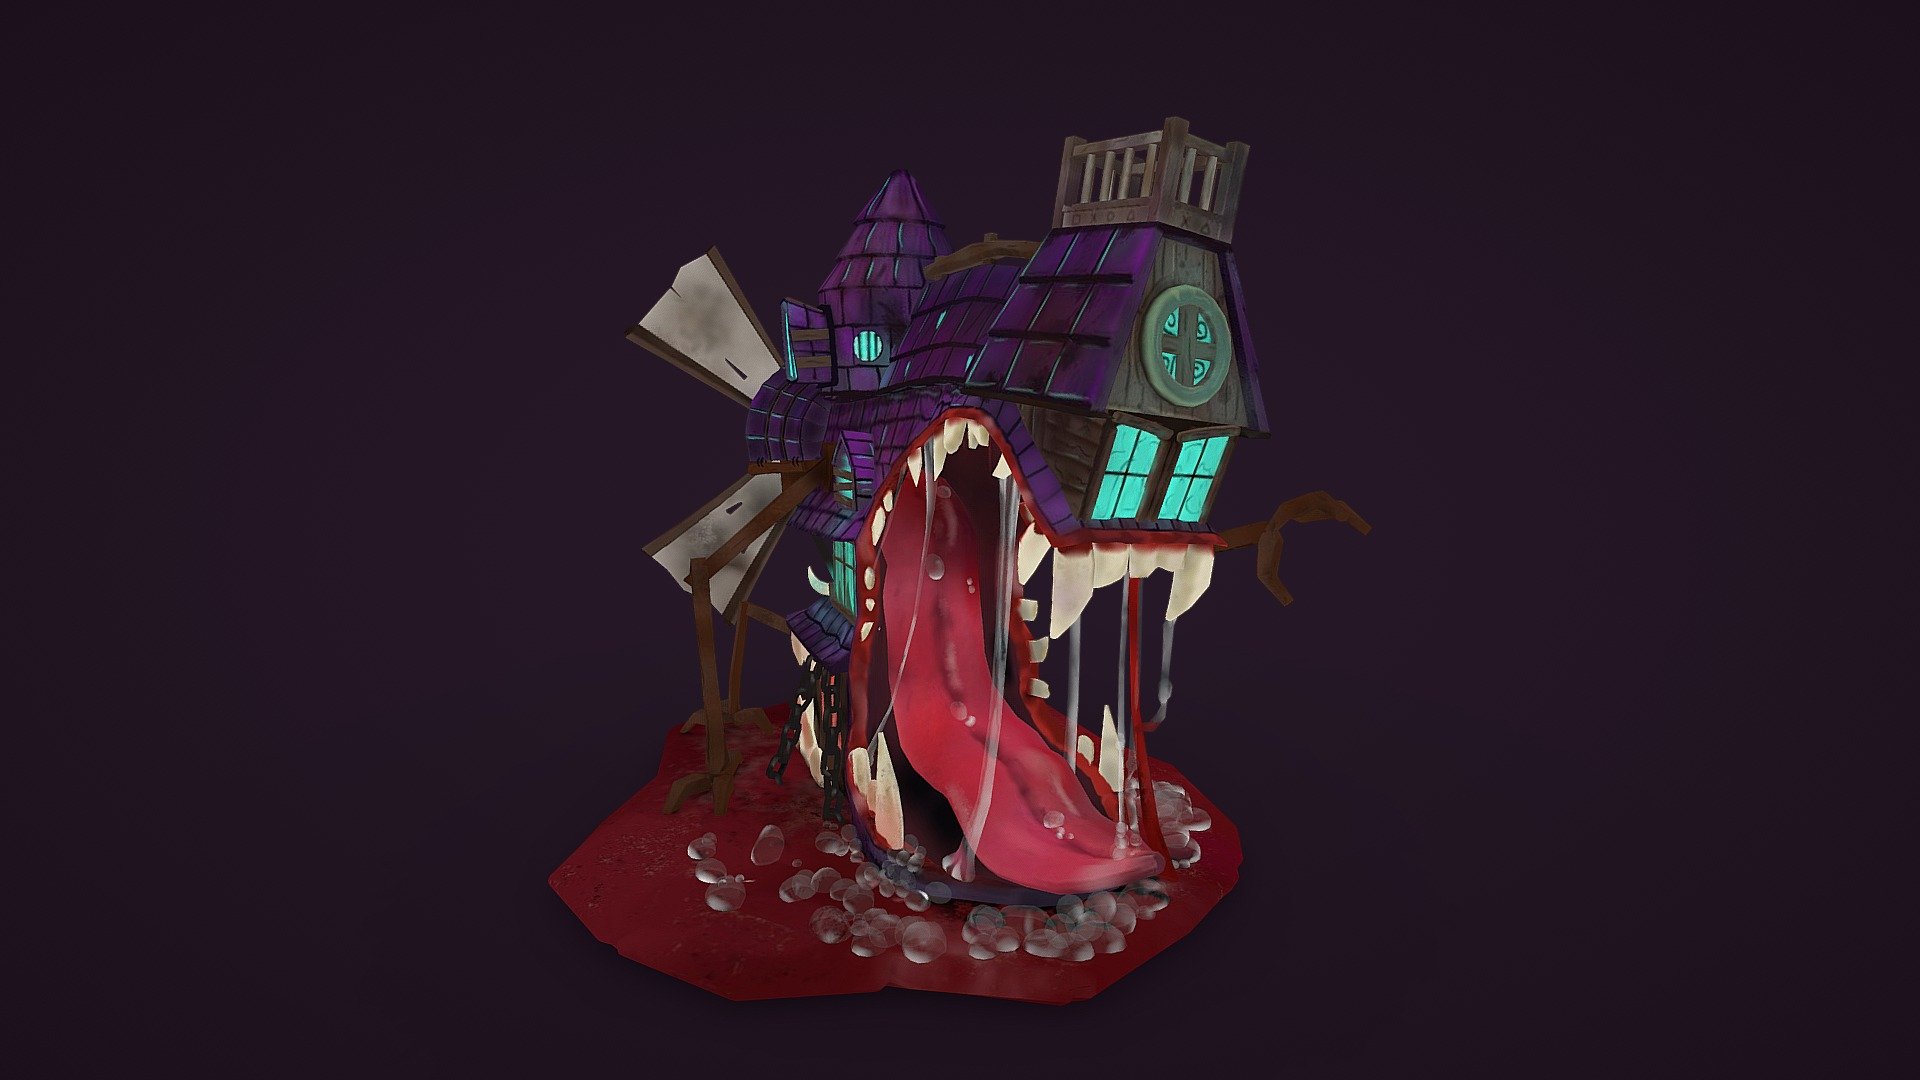 Original concept - https://render.ru/ru/gallery/artwork/135011 - Home monster - 3D model by igoremba 3d model